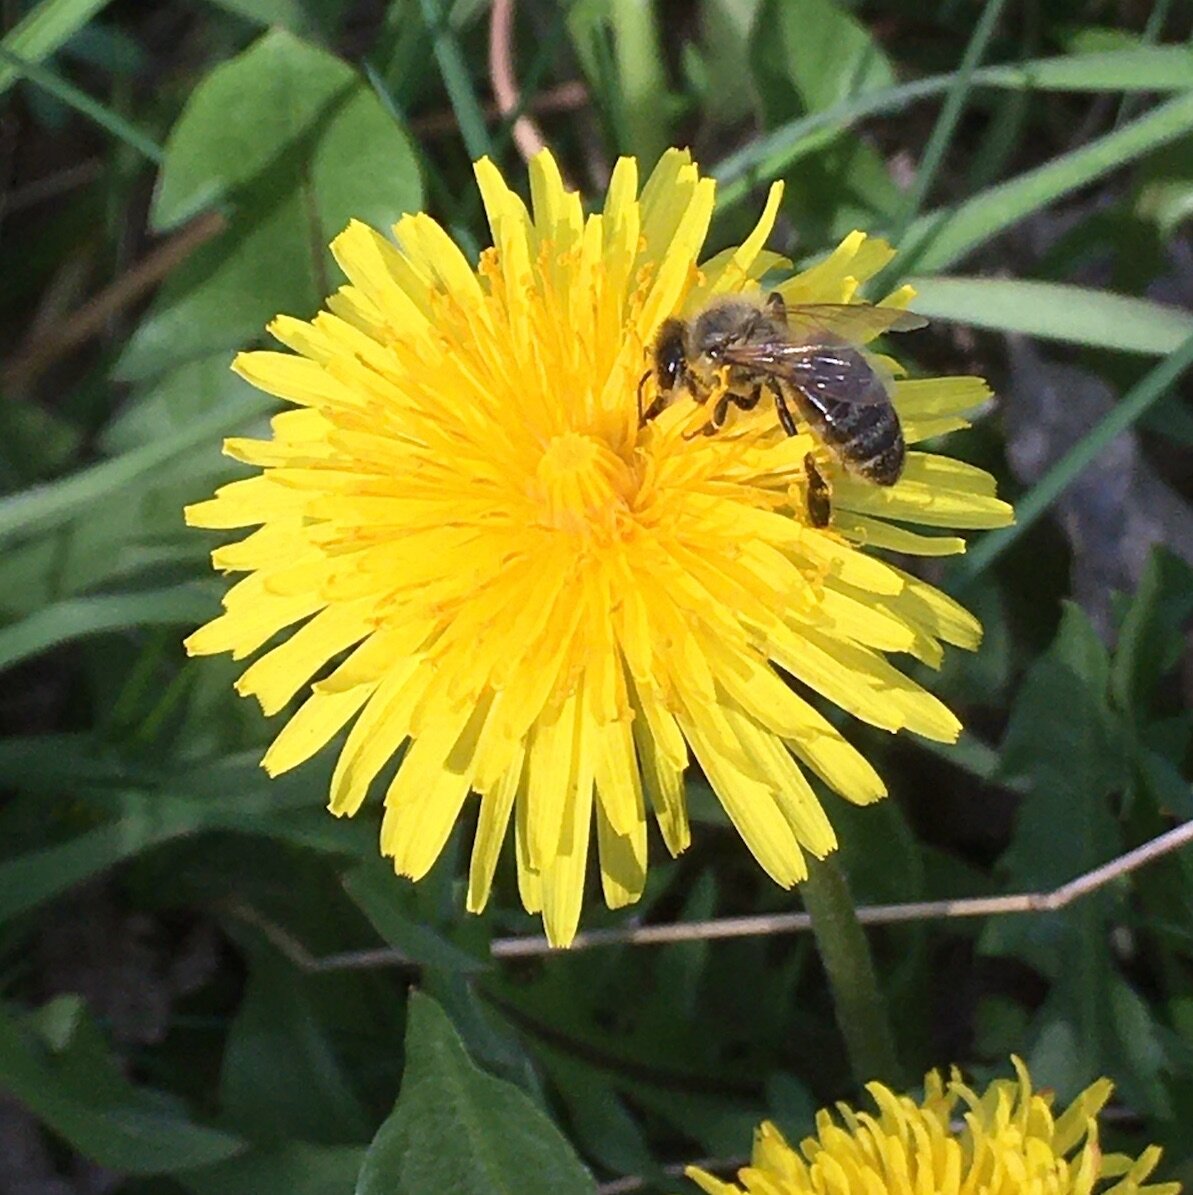  Honey bee visiting a dandelion 